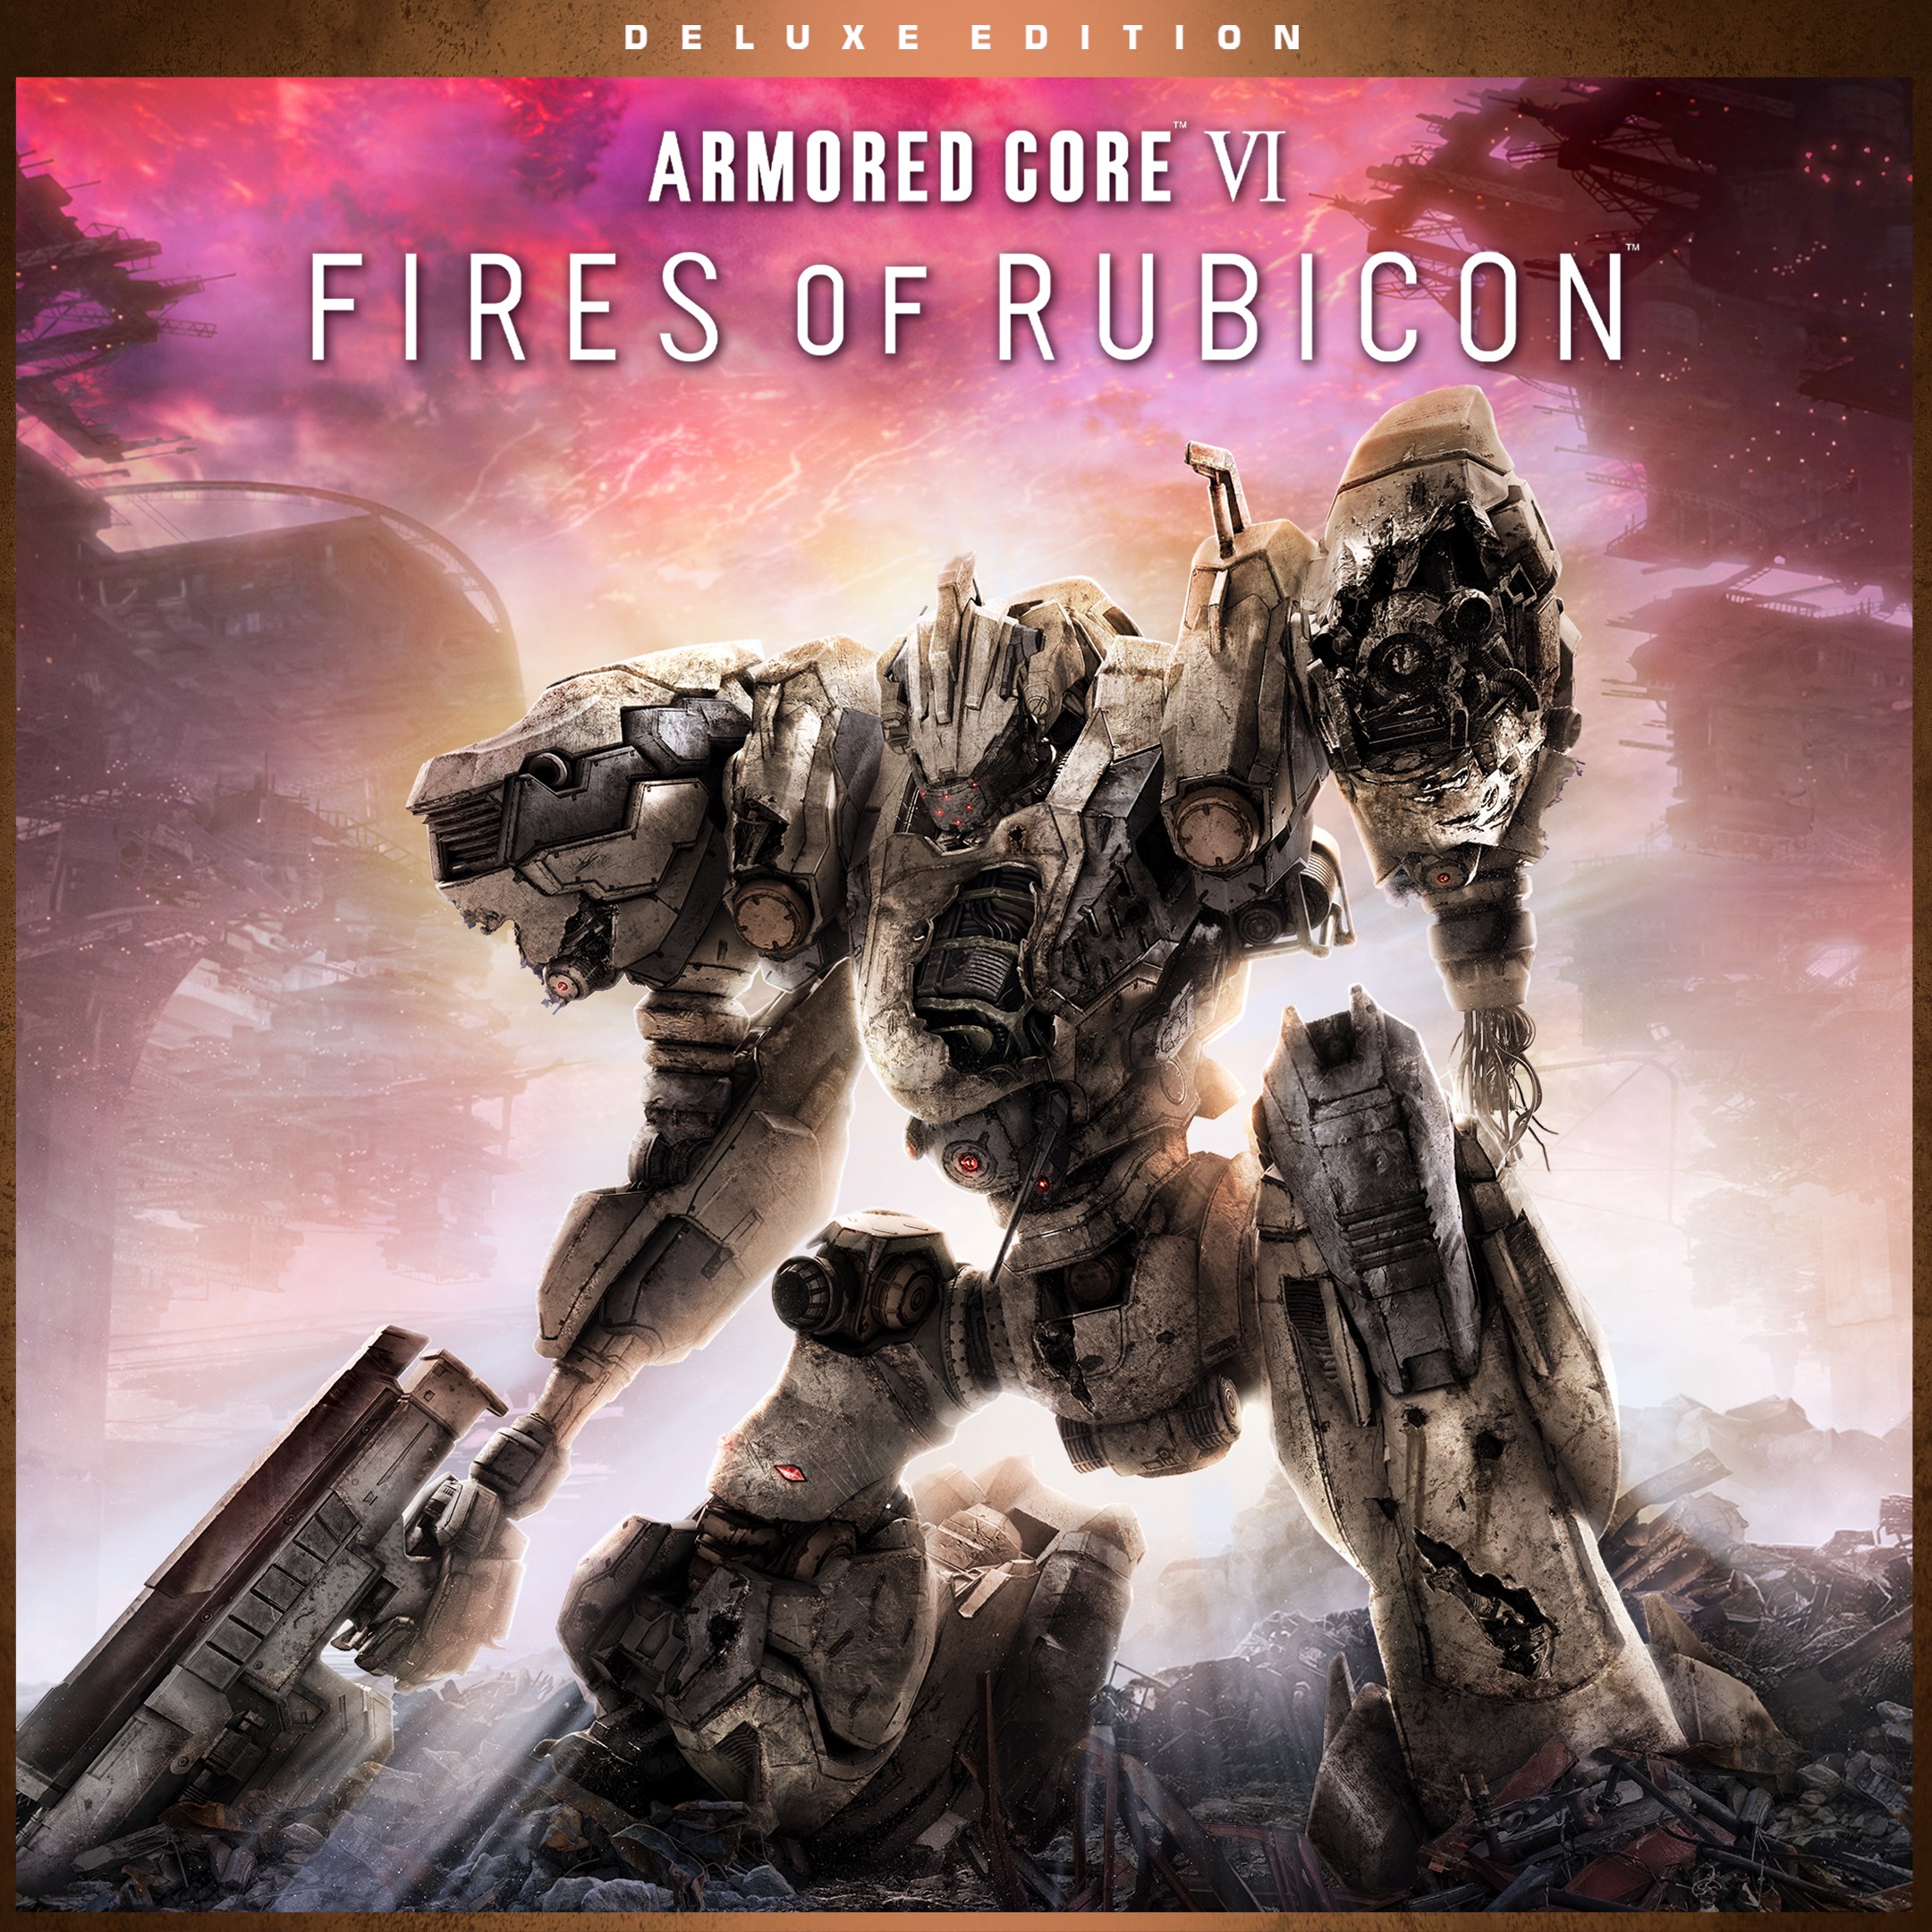 Armored core tm vi. Armored Core vi: Fires of Rubicon. Armored Core 6 Deluxe Edition. Armored Core vi: Fires of Rubicon игра.